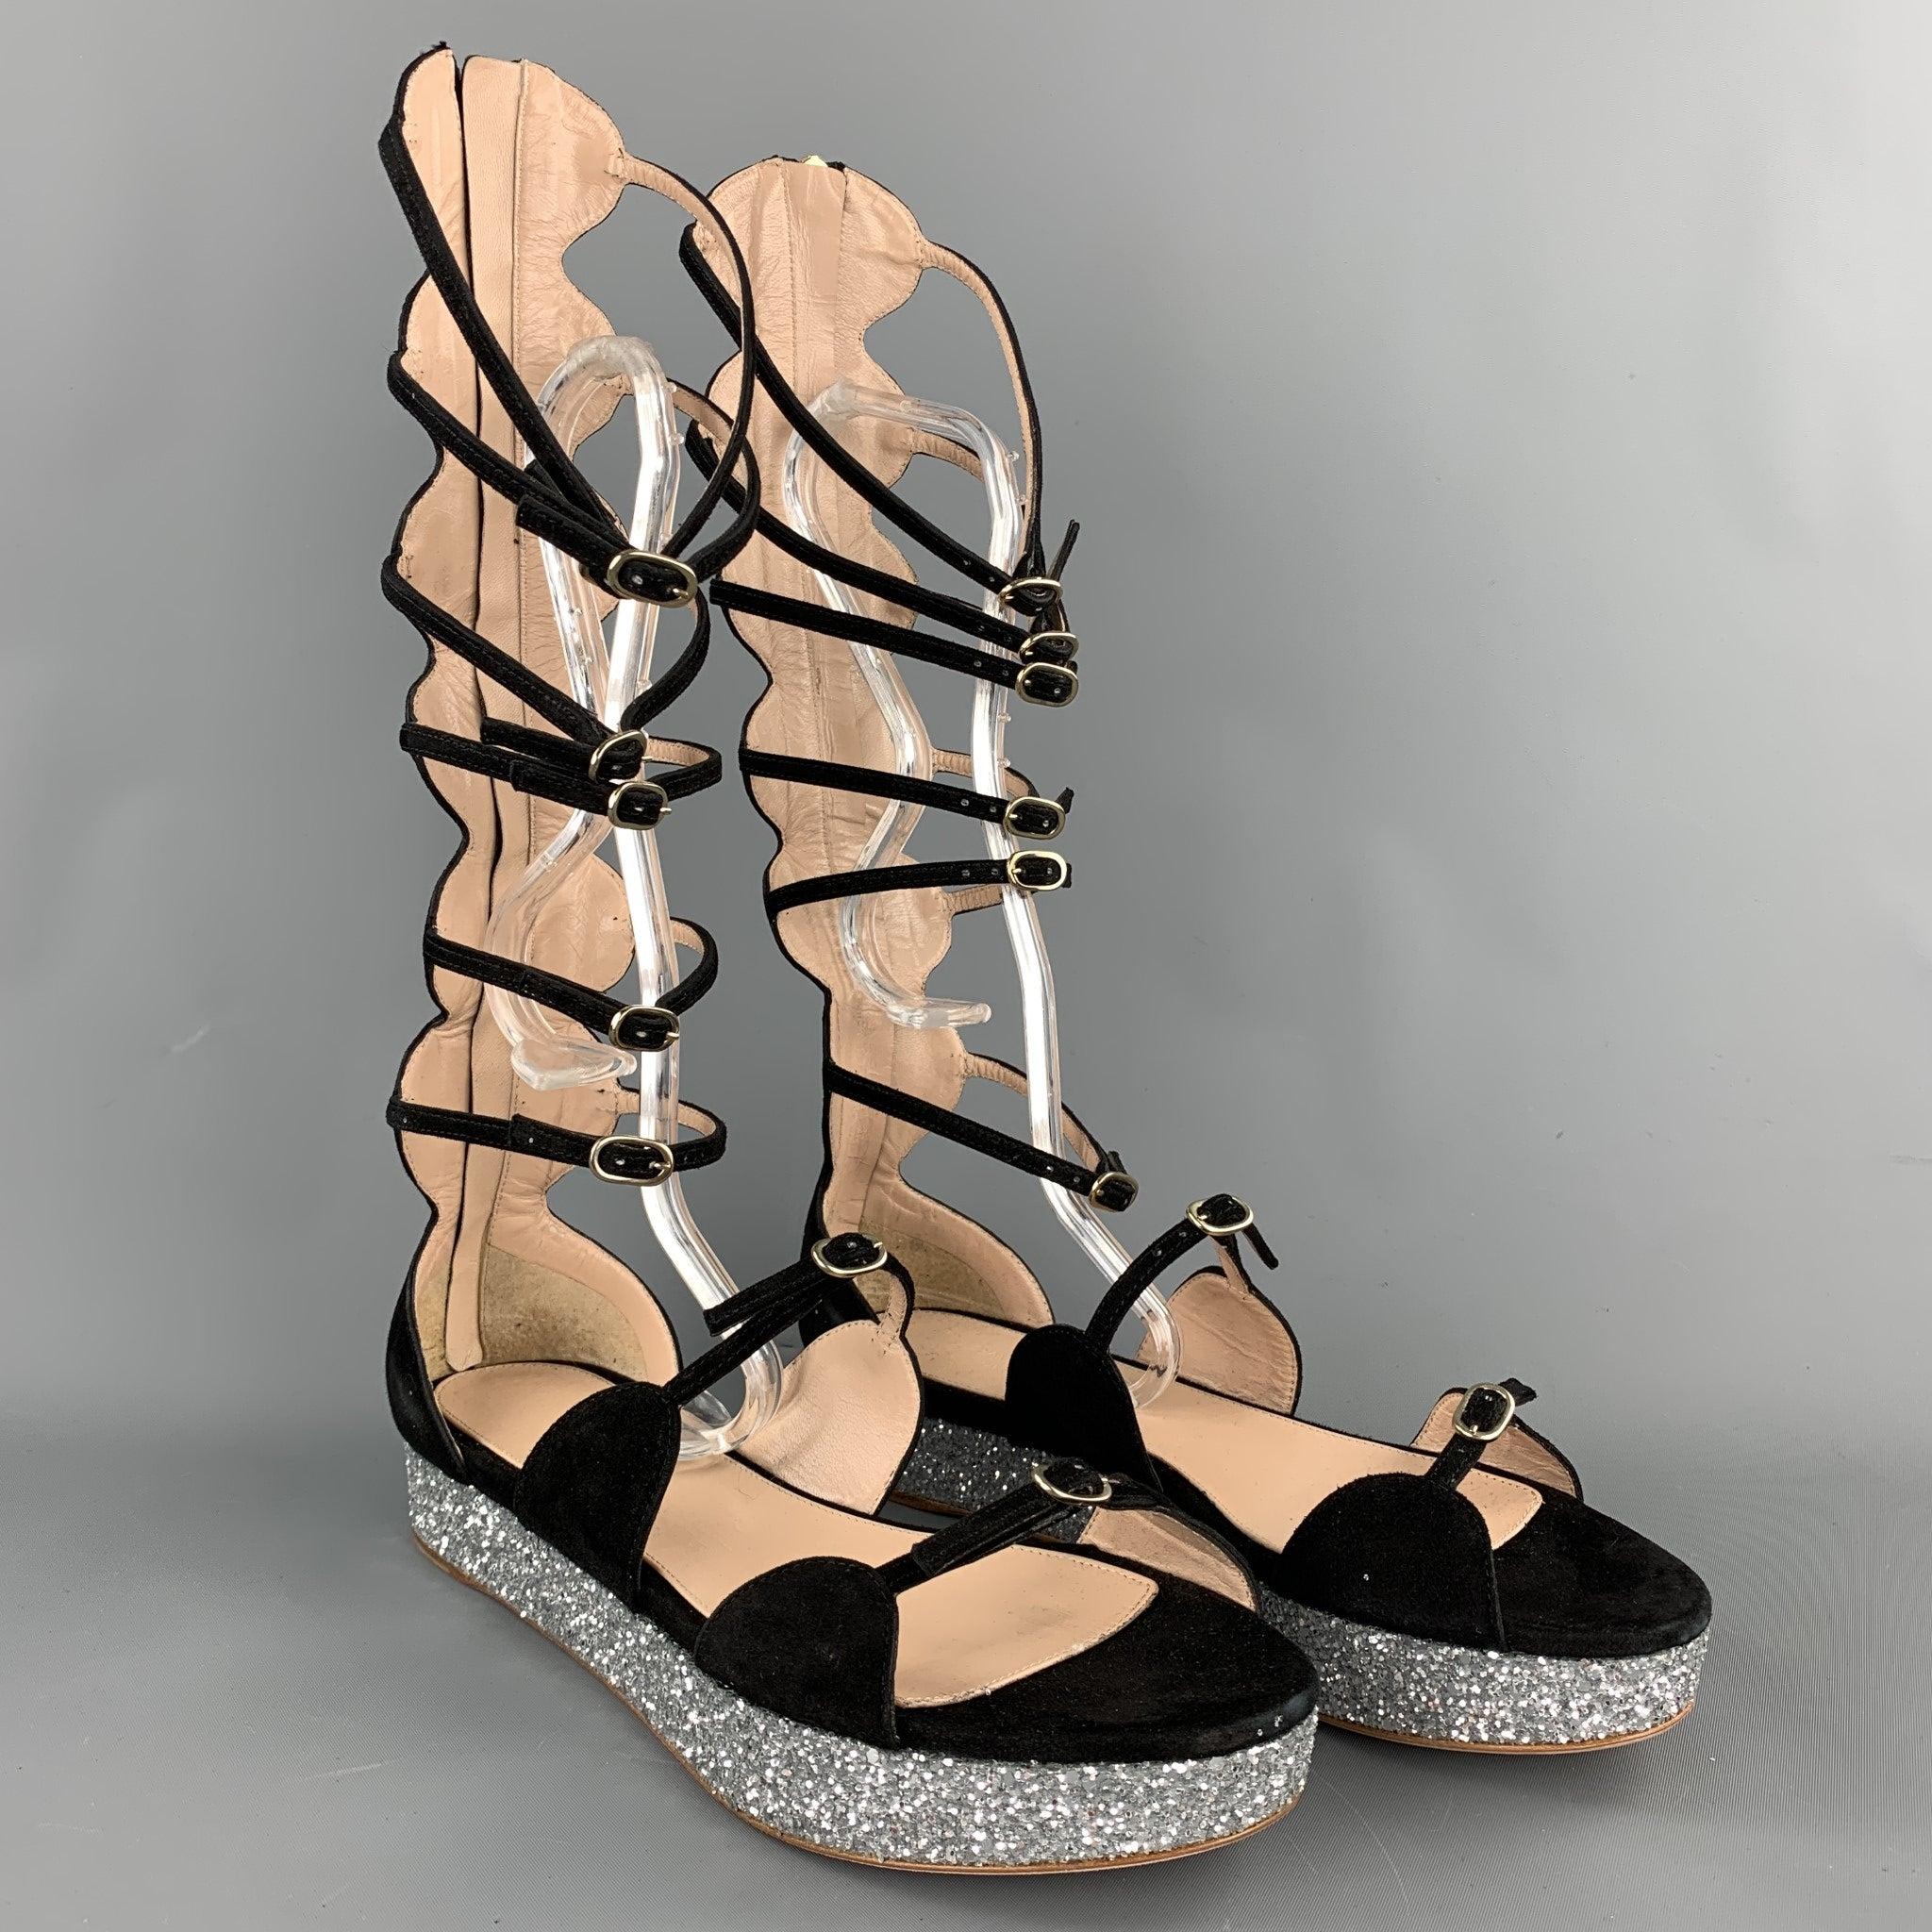 GIAMBATTISTA VALLI S/S 2016 Size 8 Black Suede Glitter Gladiator Sandals In Good Condition For Sale In San Francisco, CA